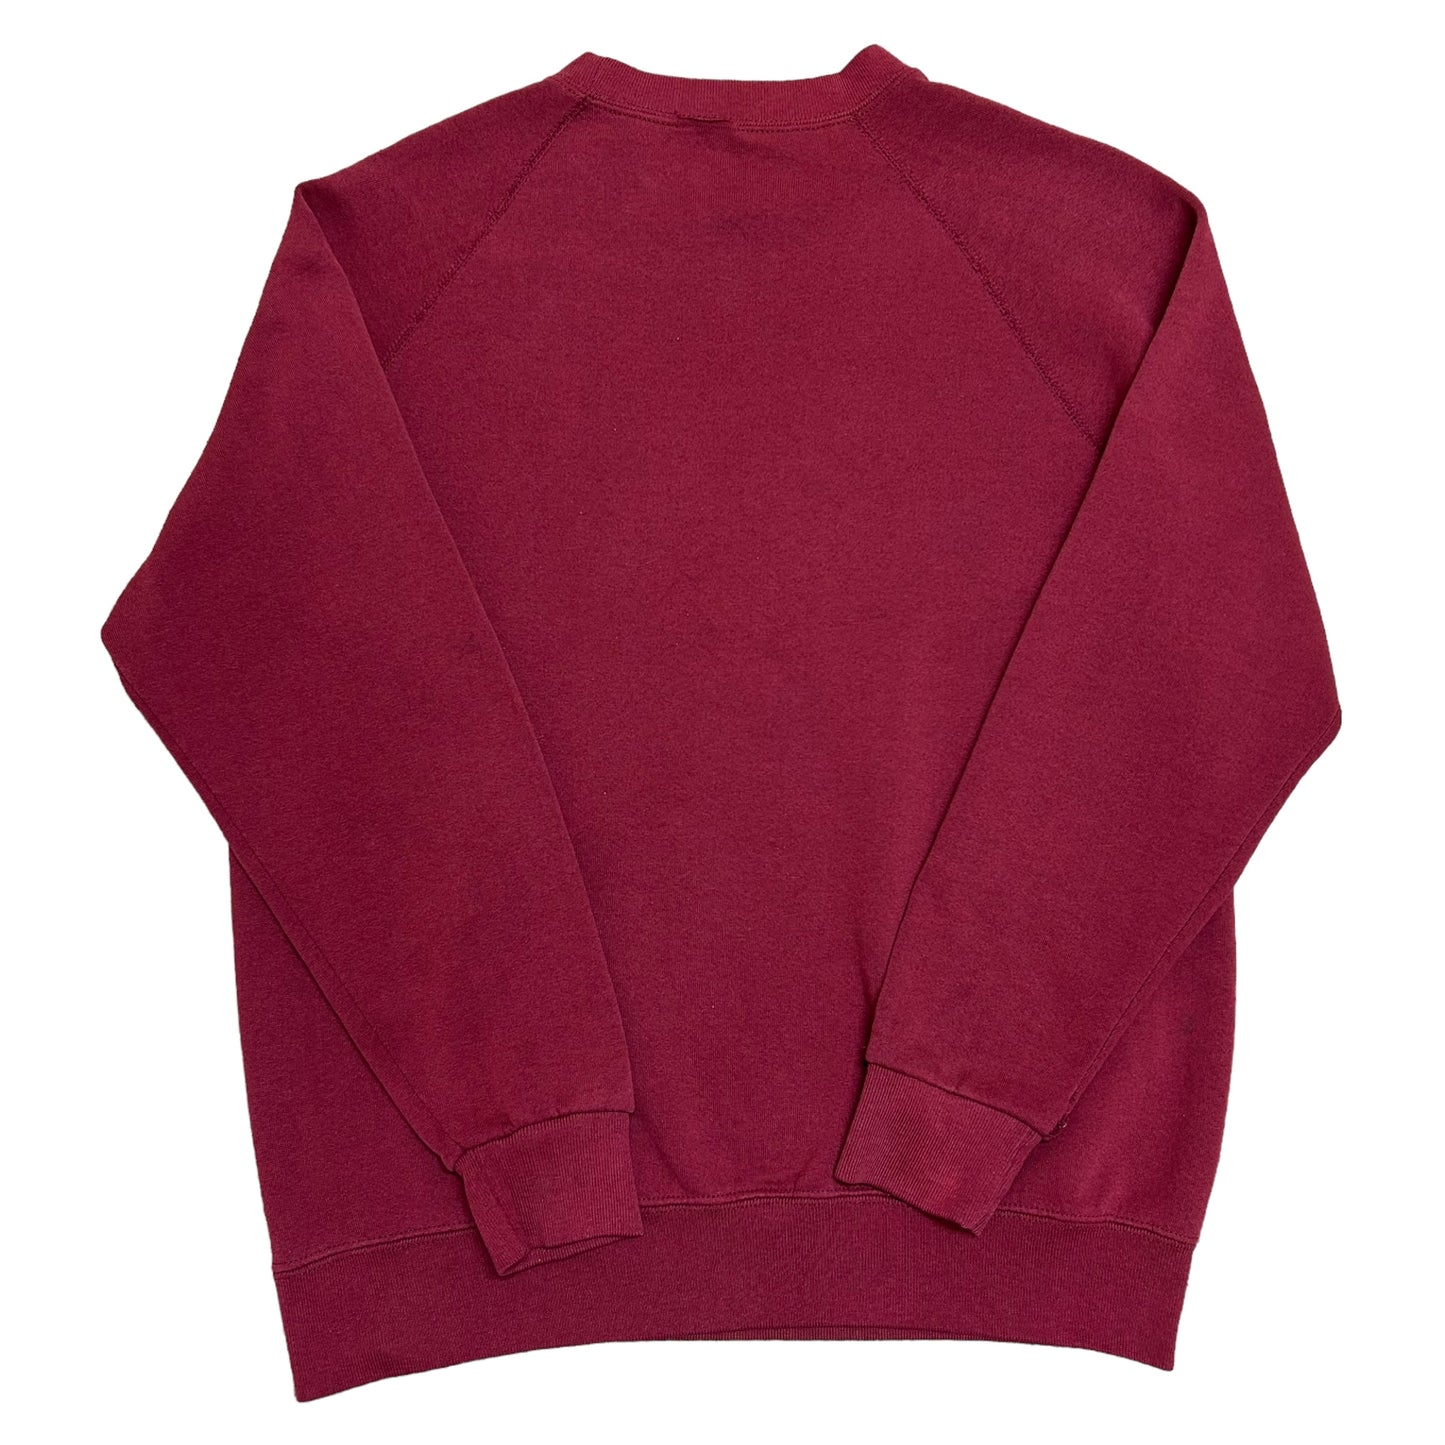 Vintage 1980s Harvard University Crest Burgundy Crewneck Sweatshirt - Size Large